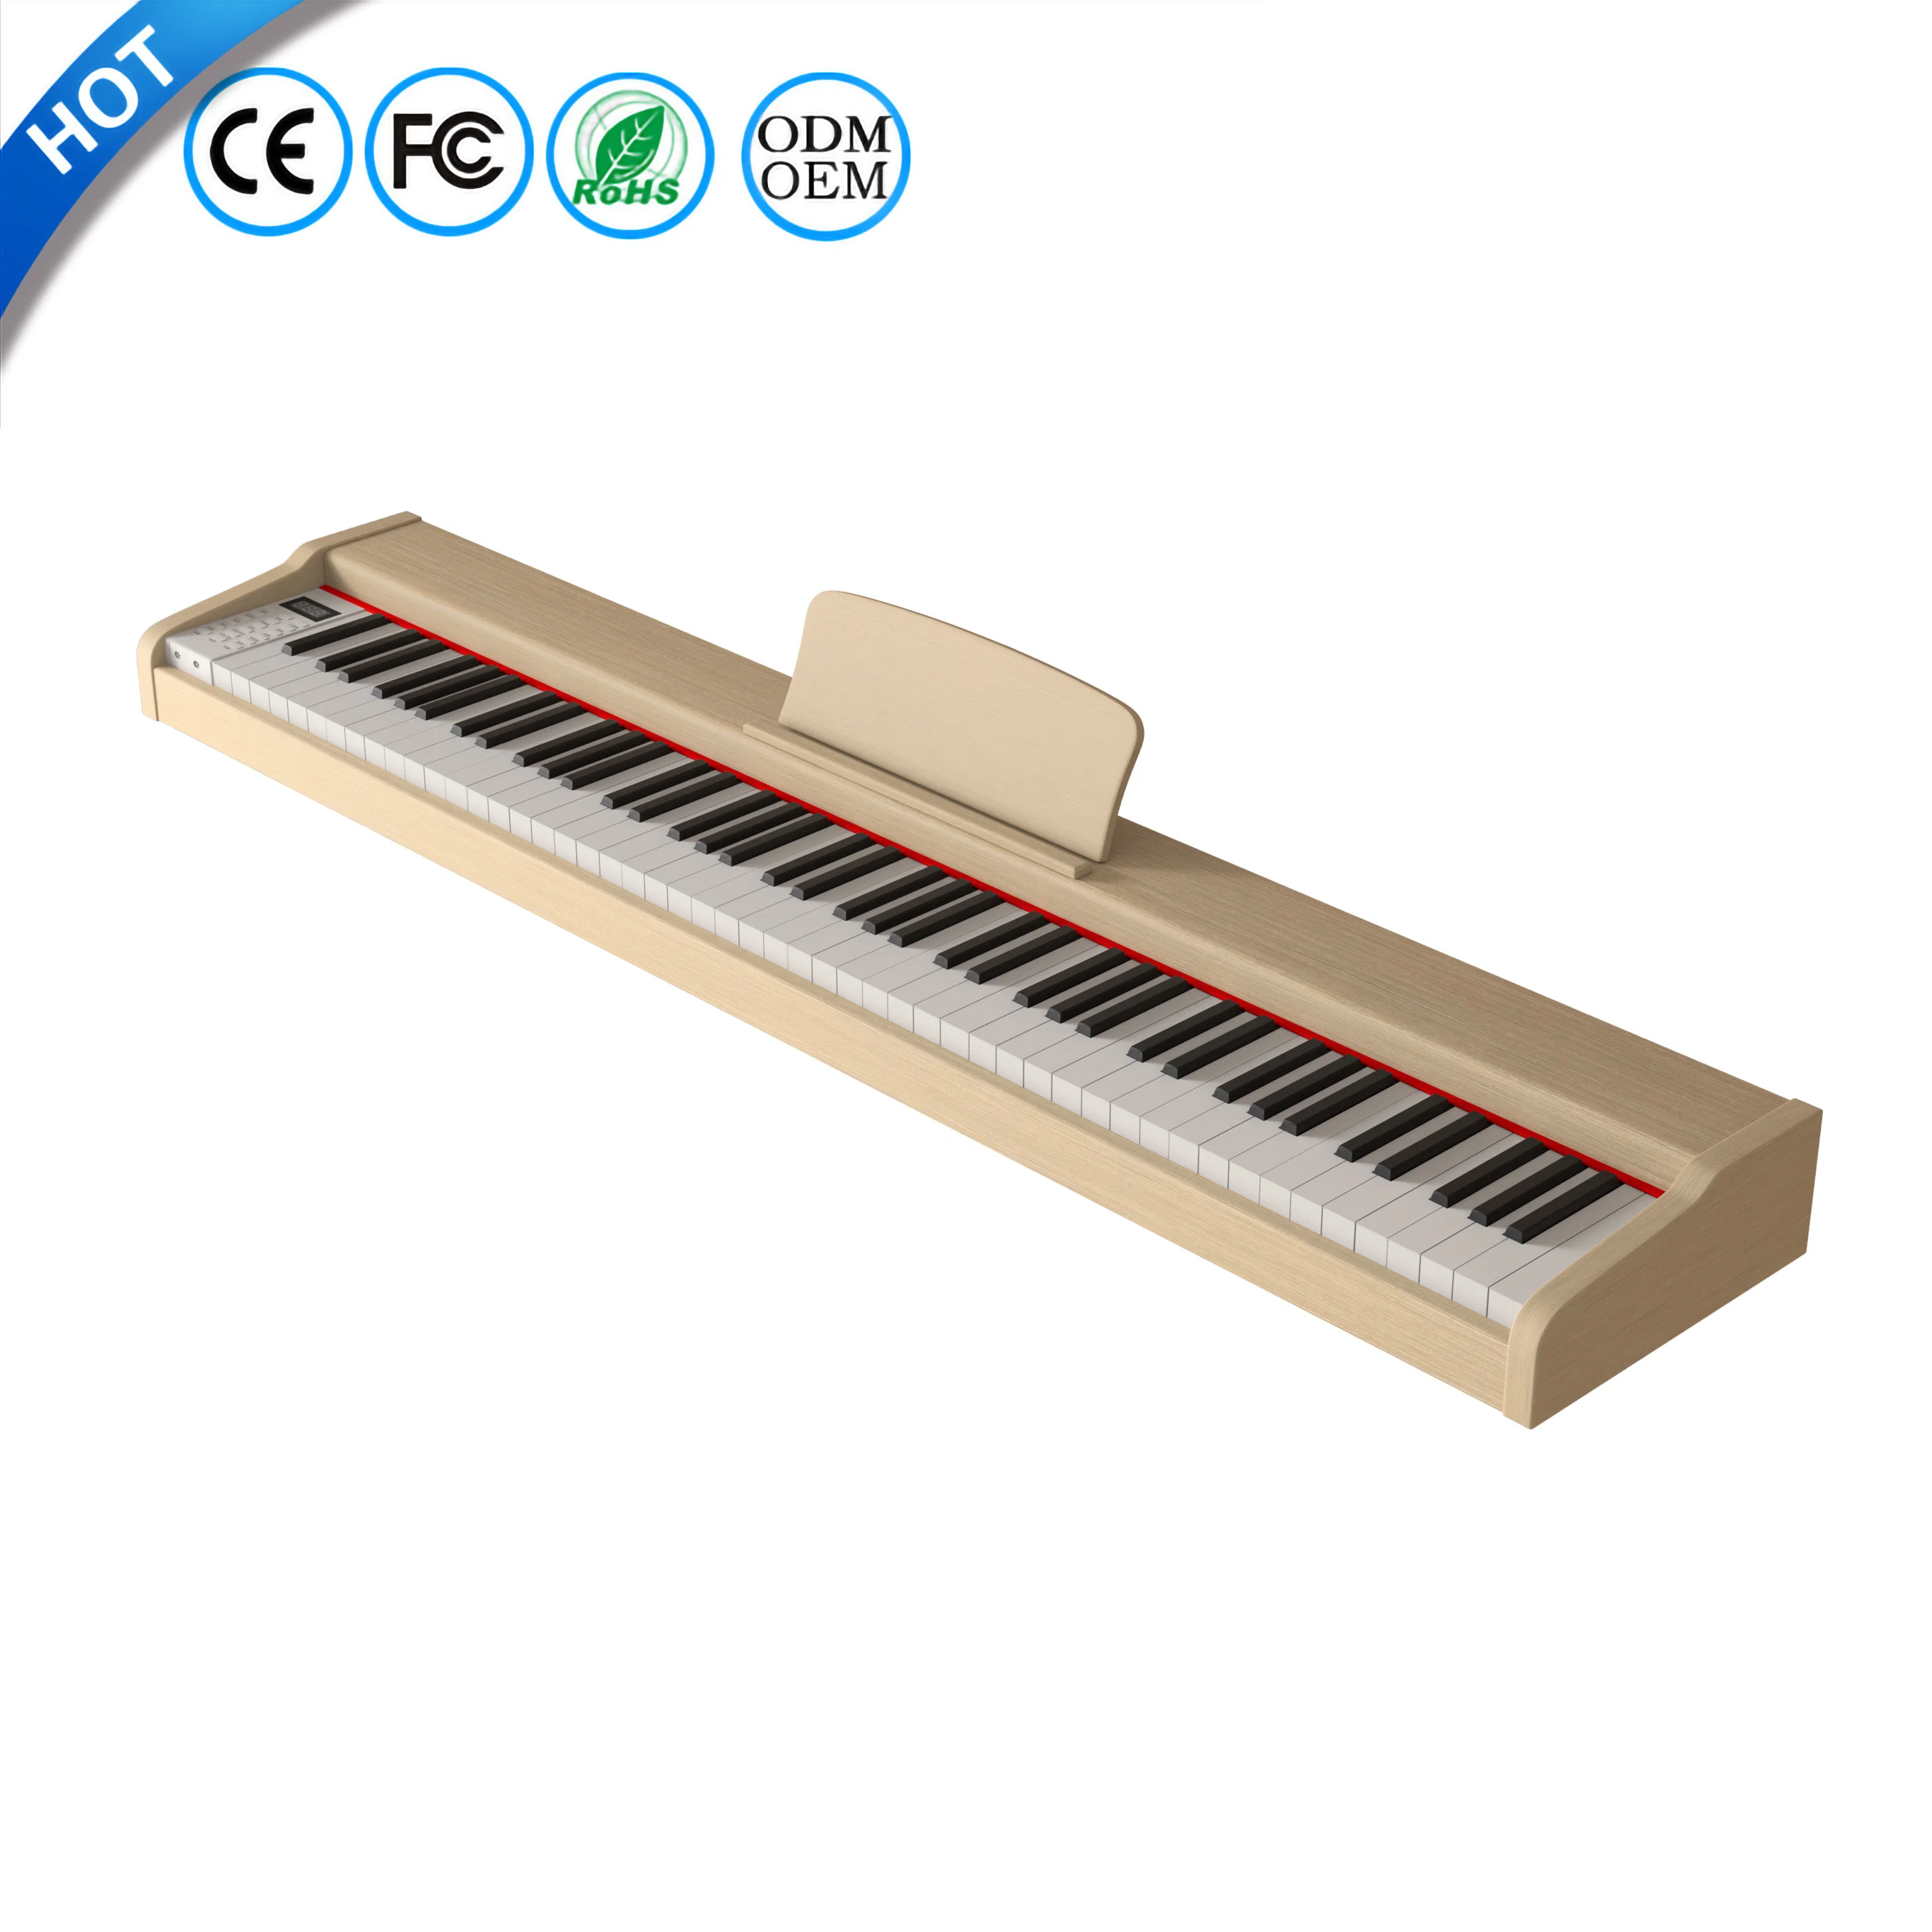 Digital Piano 88 Weighted Keys MIDI Controller Keyboard Upright Piano Price Electric OEM Piano Keyboard